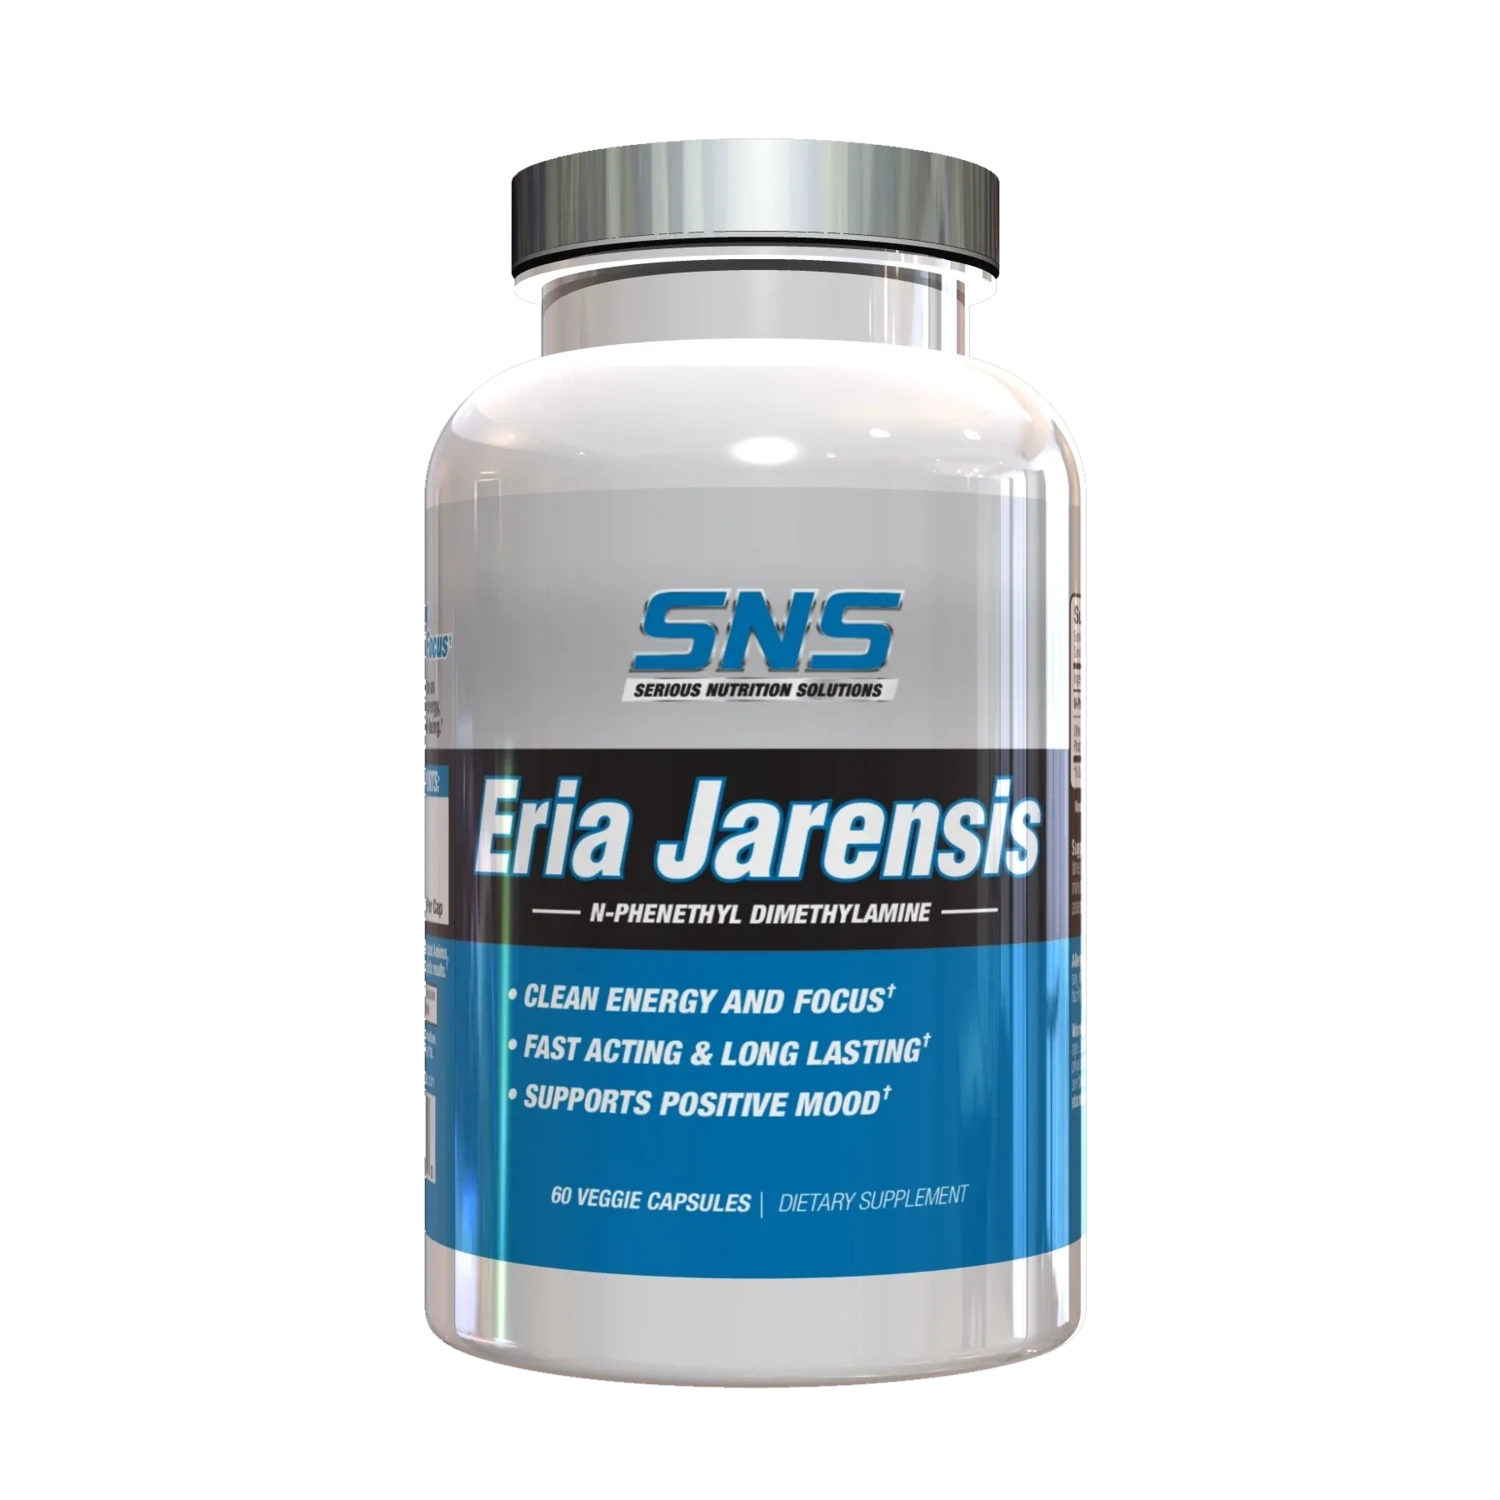 Serious Nutrition Solutions Eria Jarensis